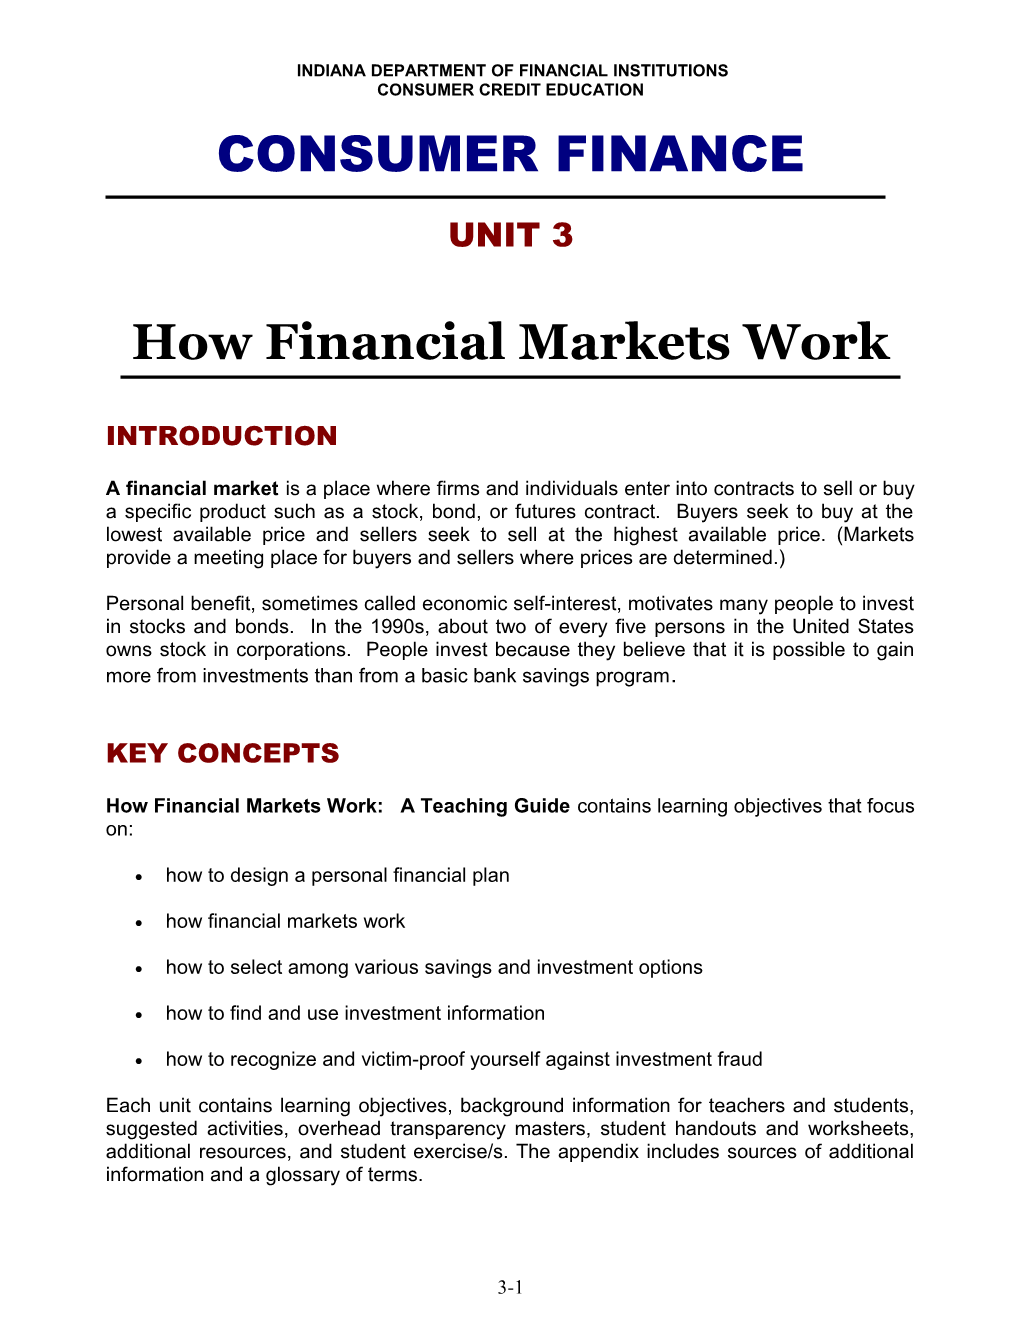 Basics of Saving & Investing : Financial Decisions (Unit 1)